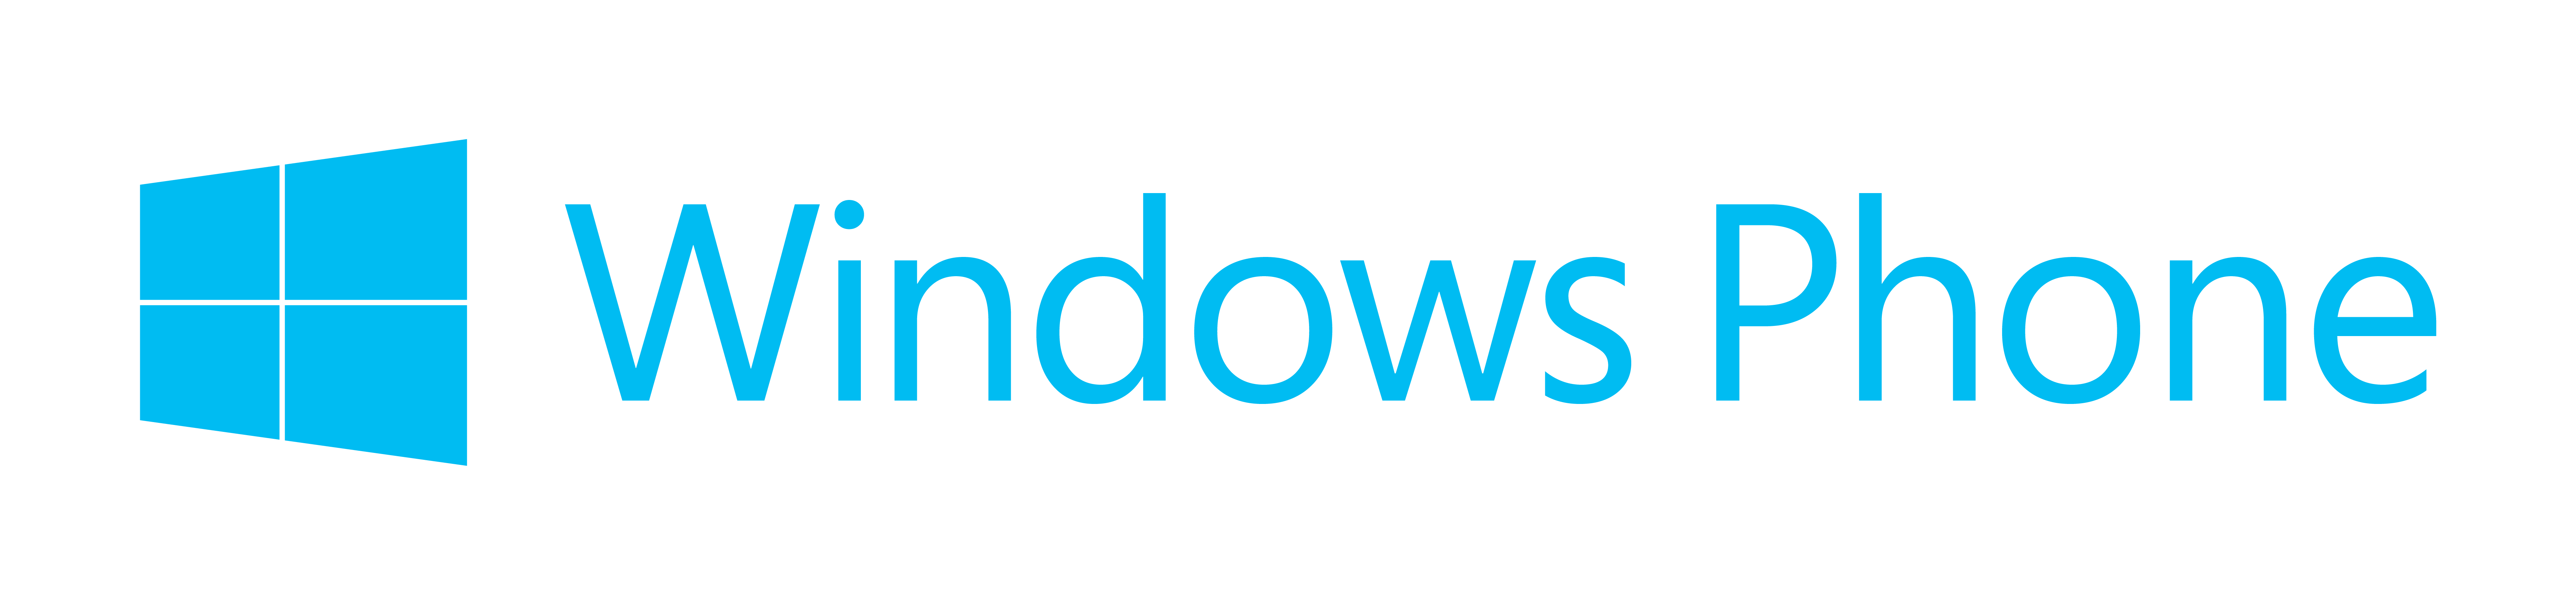 Windows Phone Logo Wallpaper